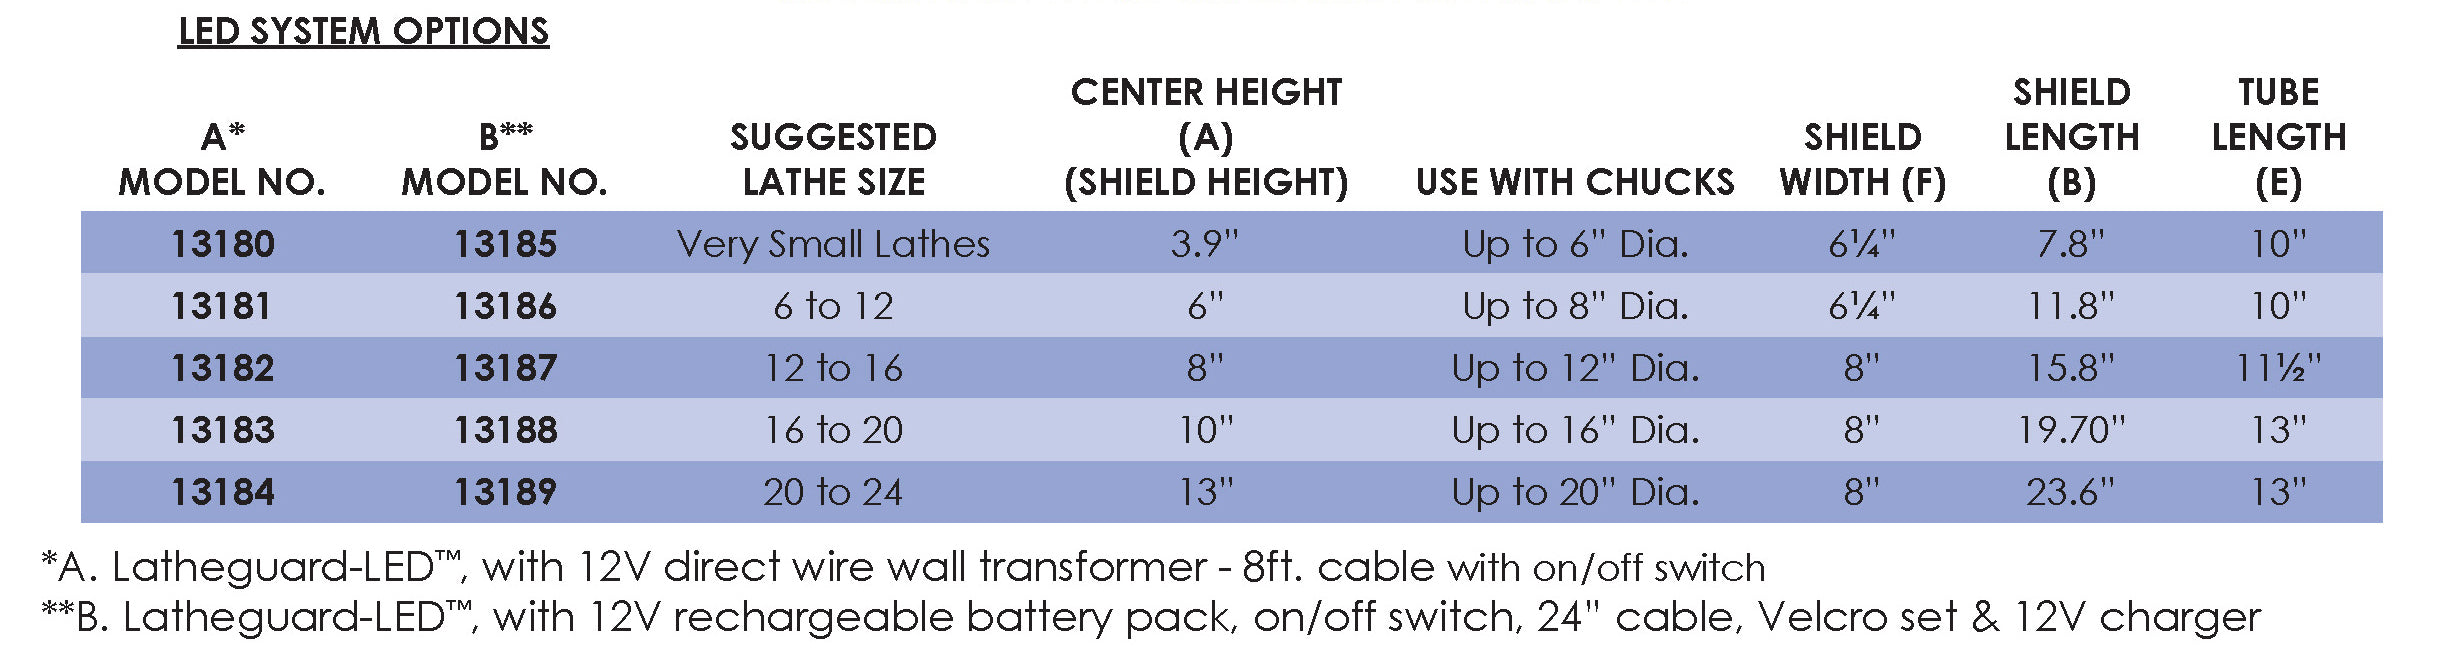 Latheguard-LED - Medium - 12V Direct Wire Wall Transformer